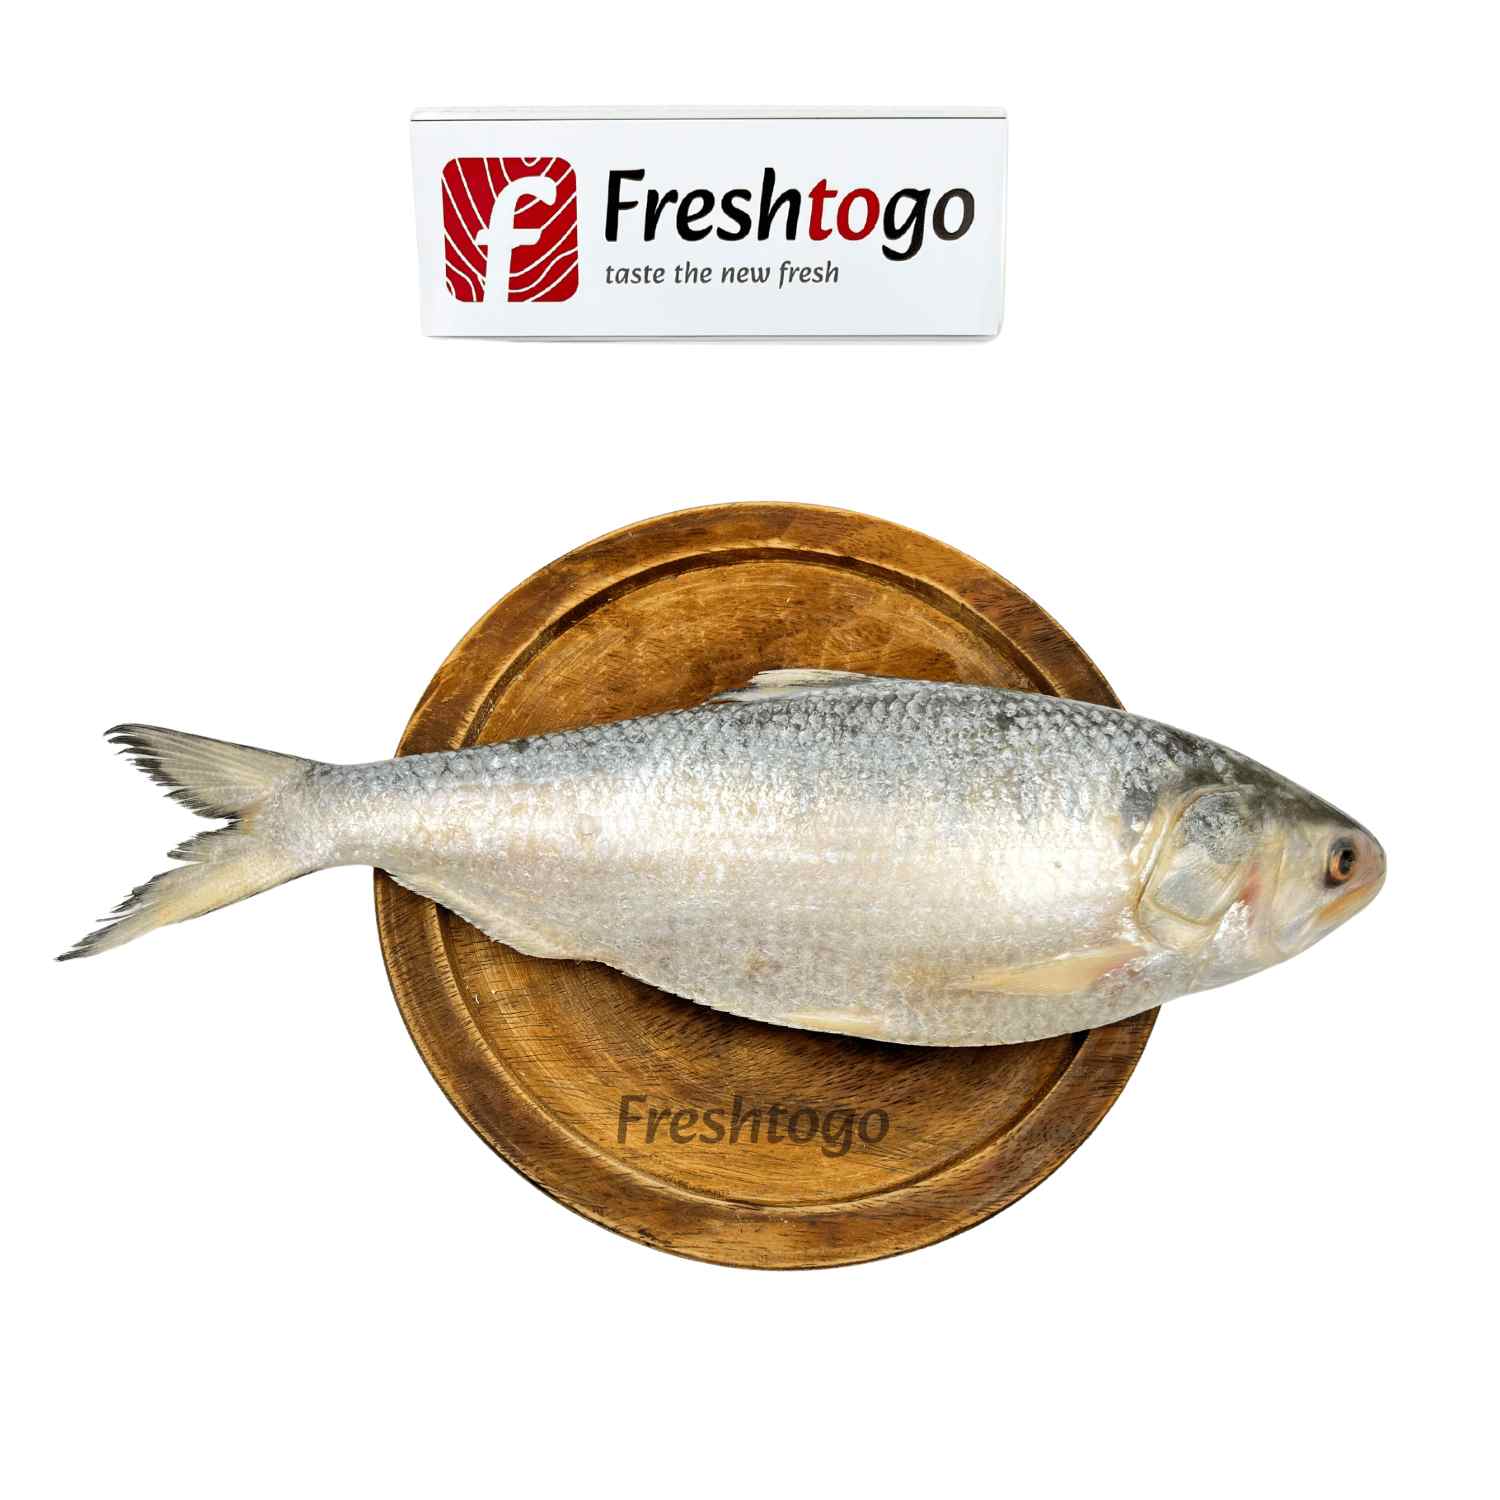 Hilsa Fish (Padma river)( 1.3 kg - 1.5 kg) - Whole, Cut, Cleaned